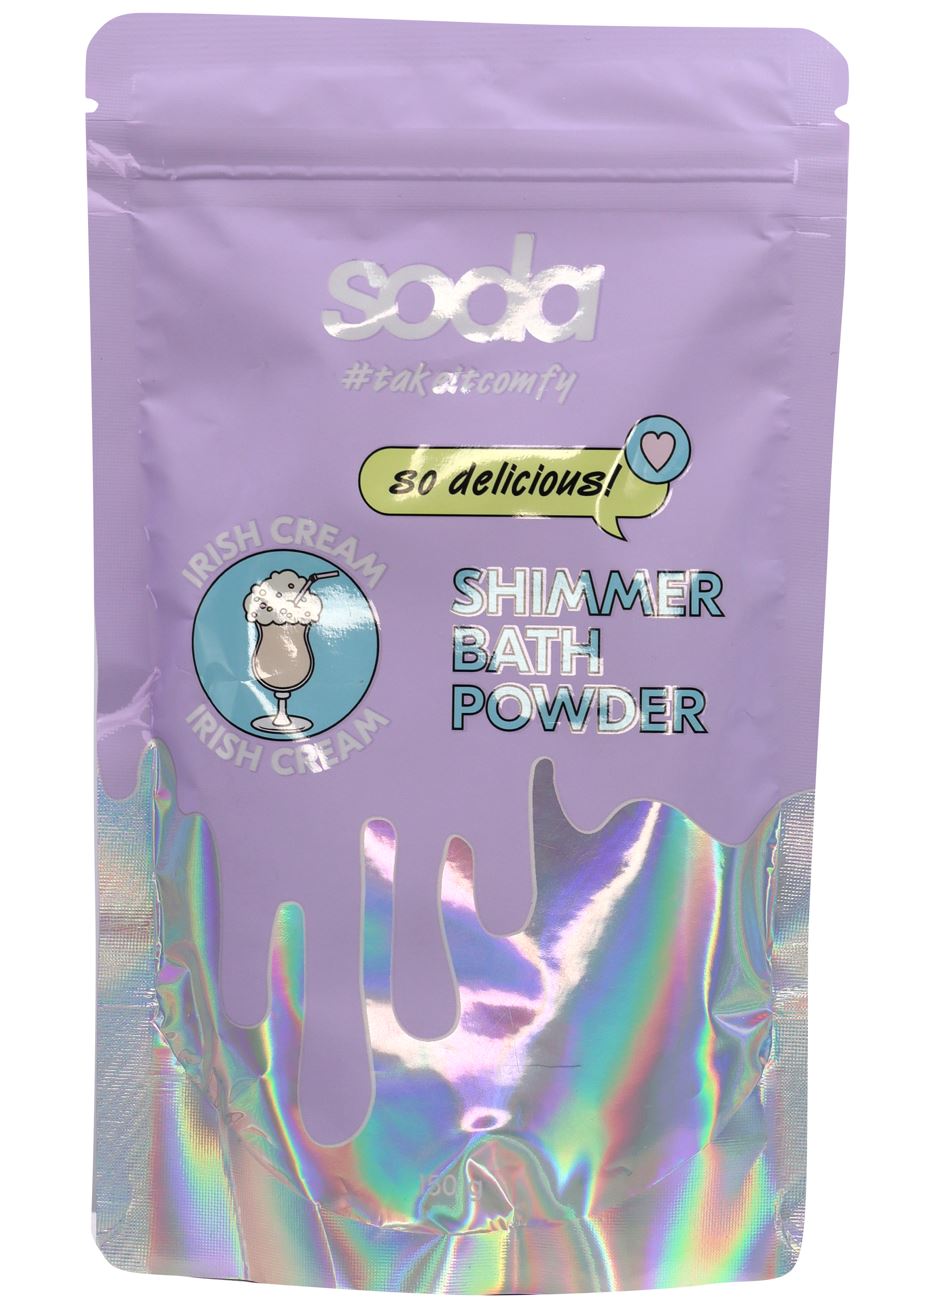 Пудра-шиммер для ванны Soda #takeitcomfy Irish Cream 150 г mipassioncorp шиммер для ванны фиолетовый кристалл 600